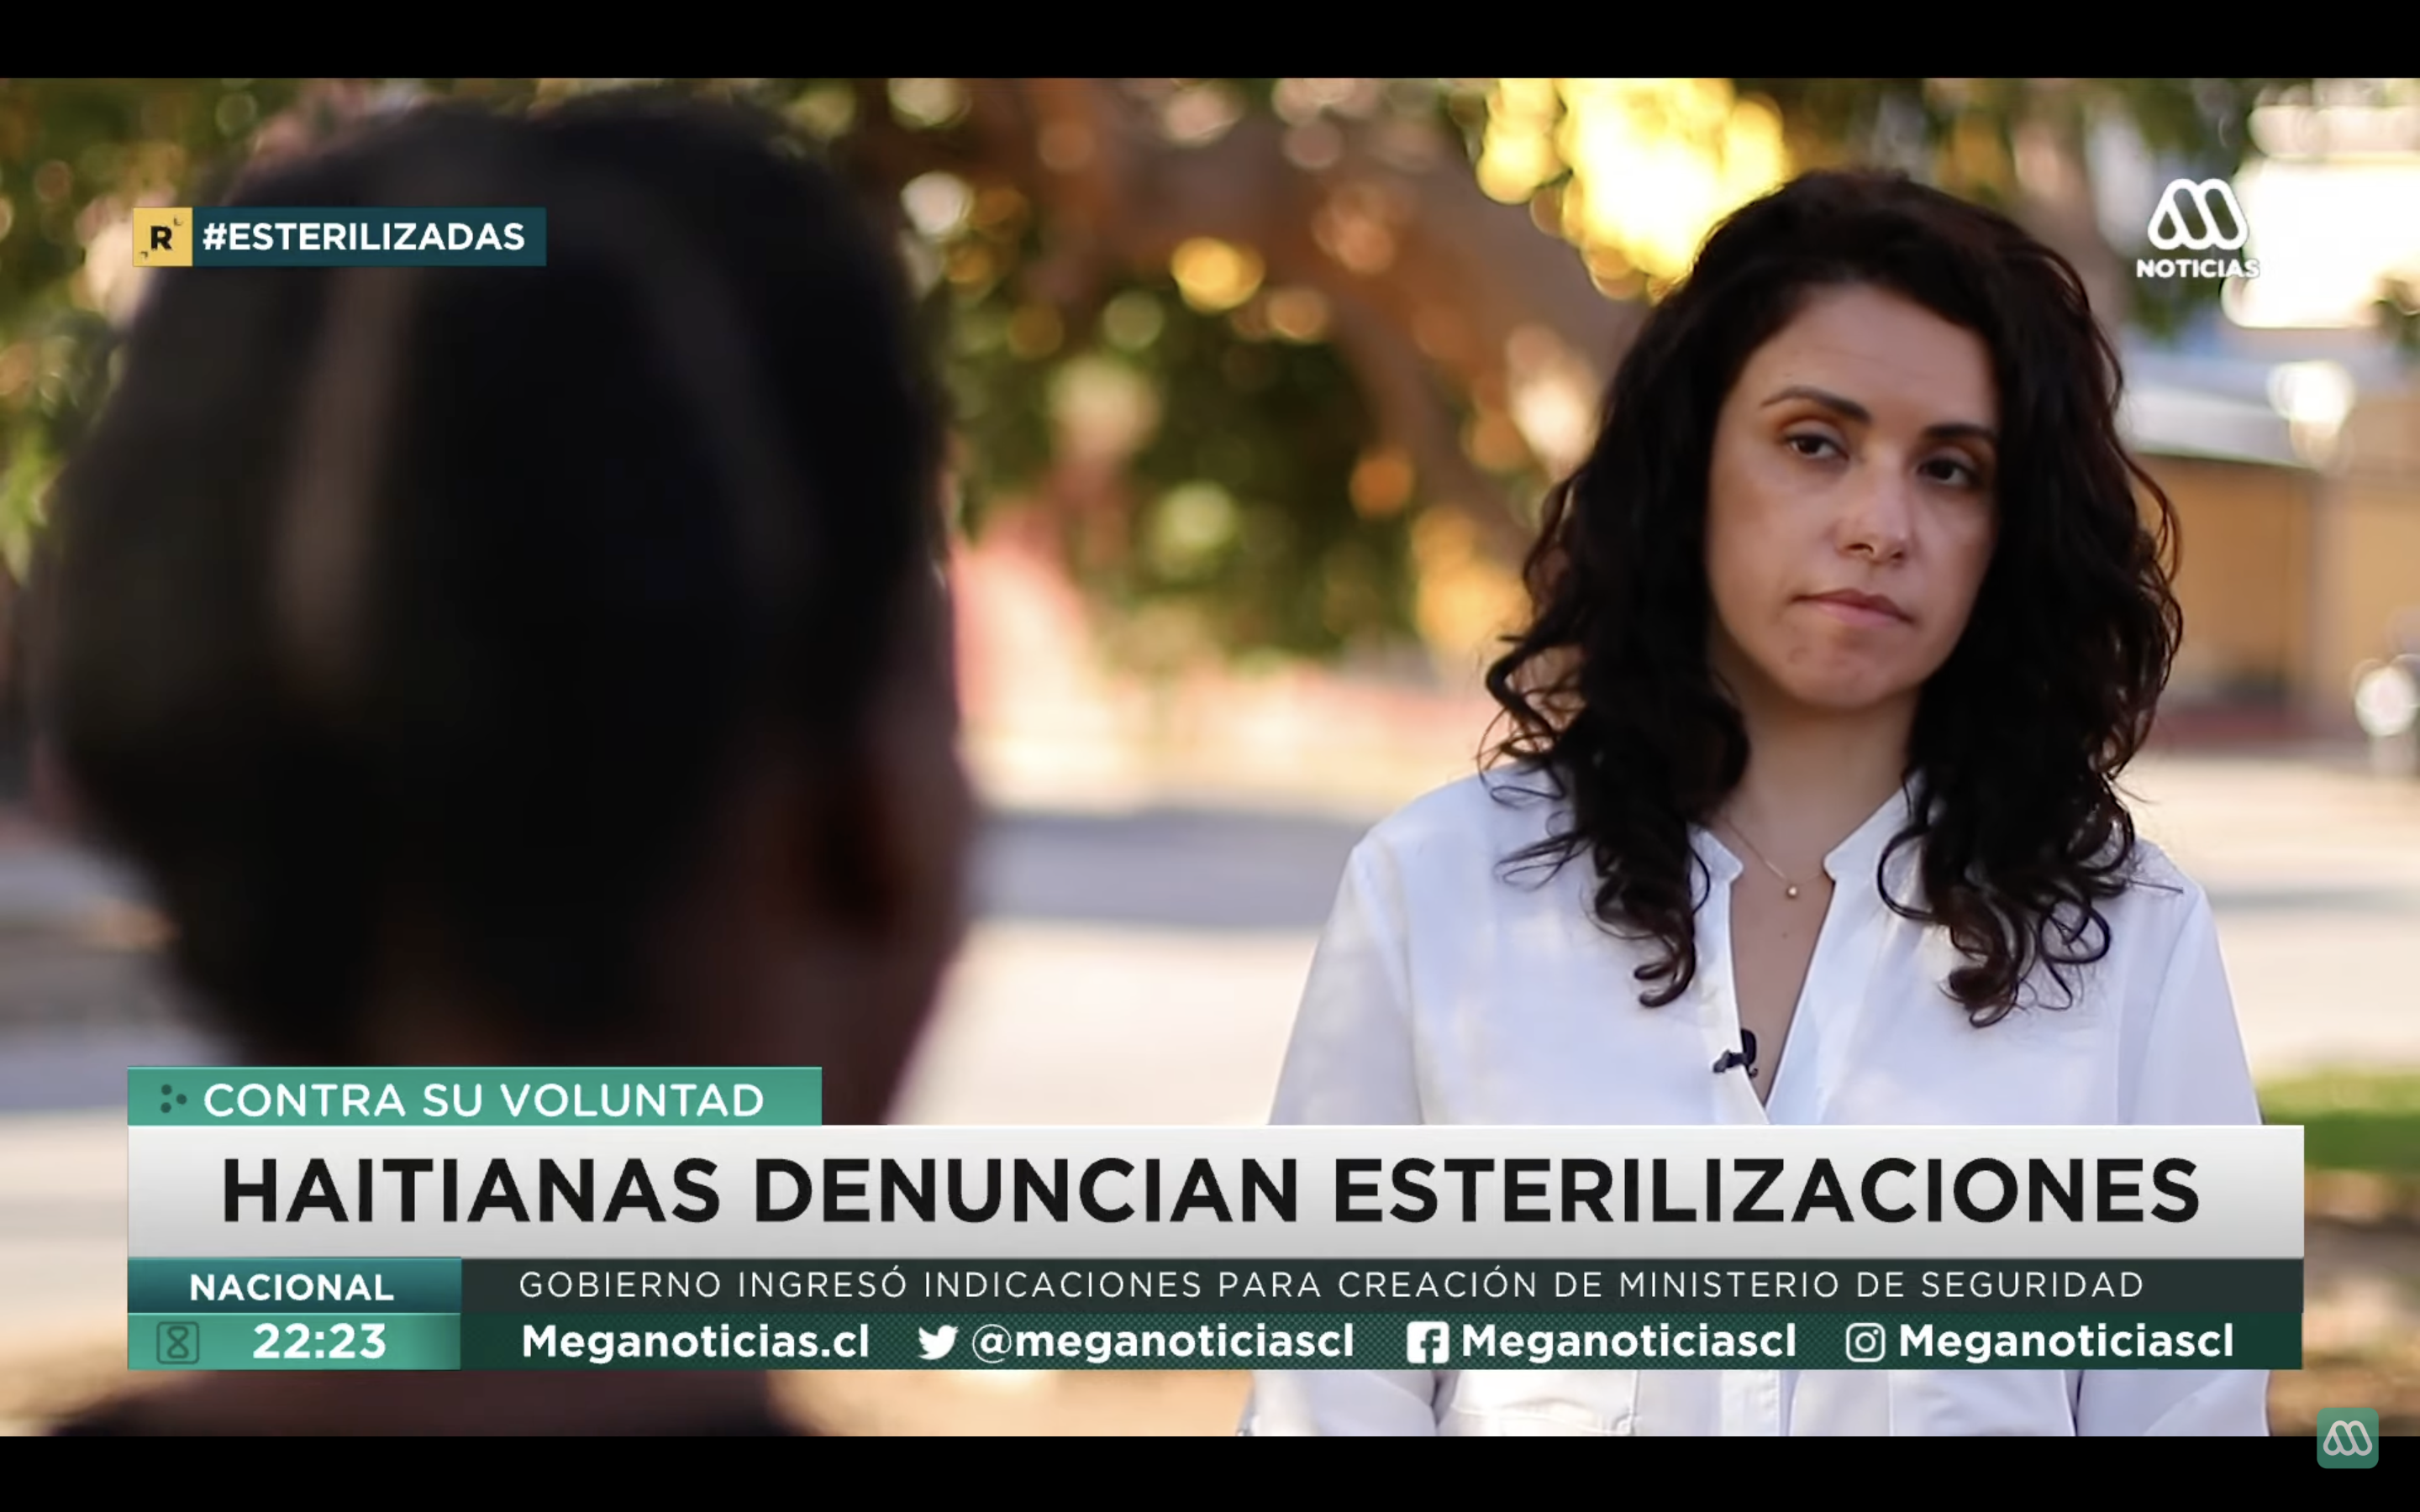 Chilean journalist Rocío Larraguibel interviews a woman for a TV report.